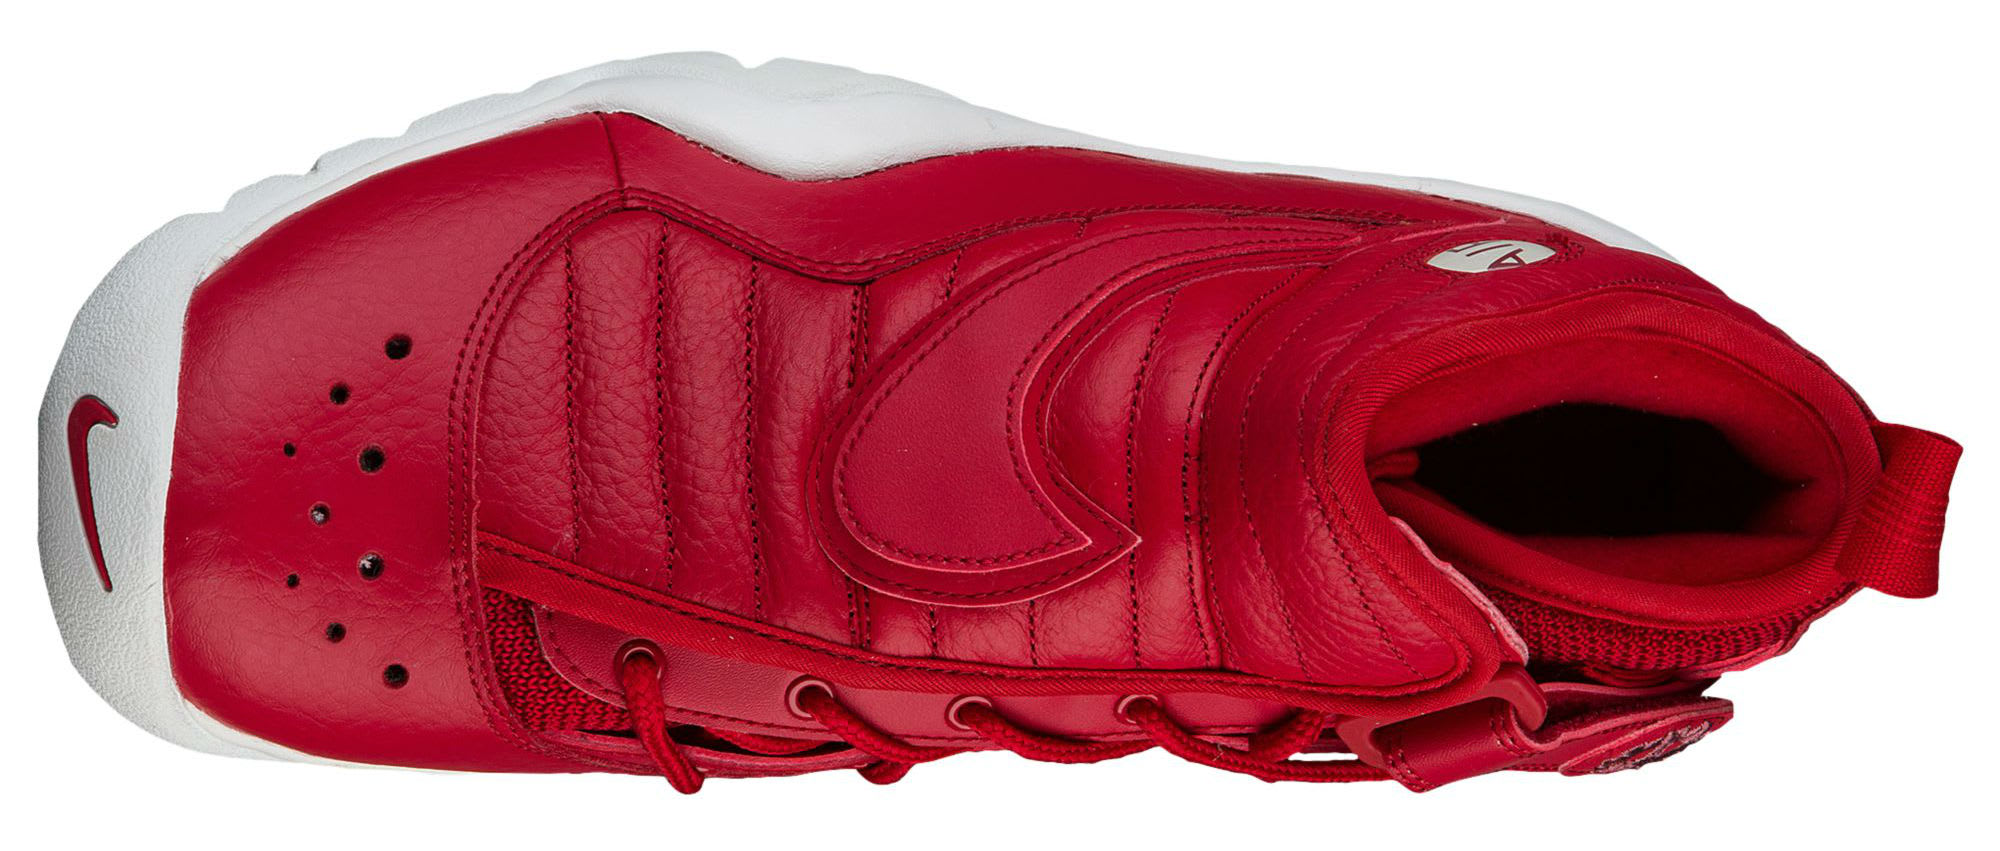 Nike Air Shake Ndestrukt Red LeatherRelease Date Top 880869-600